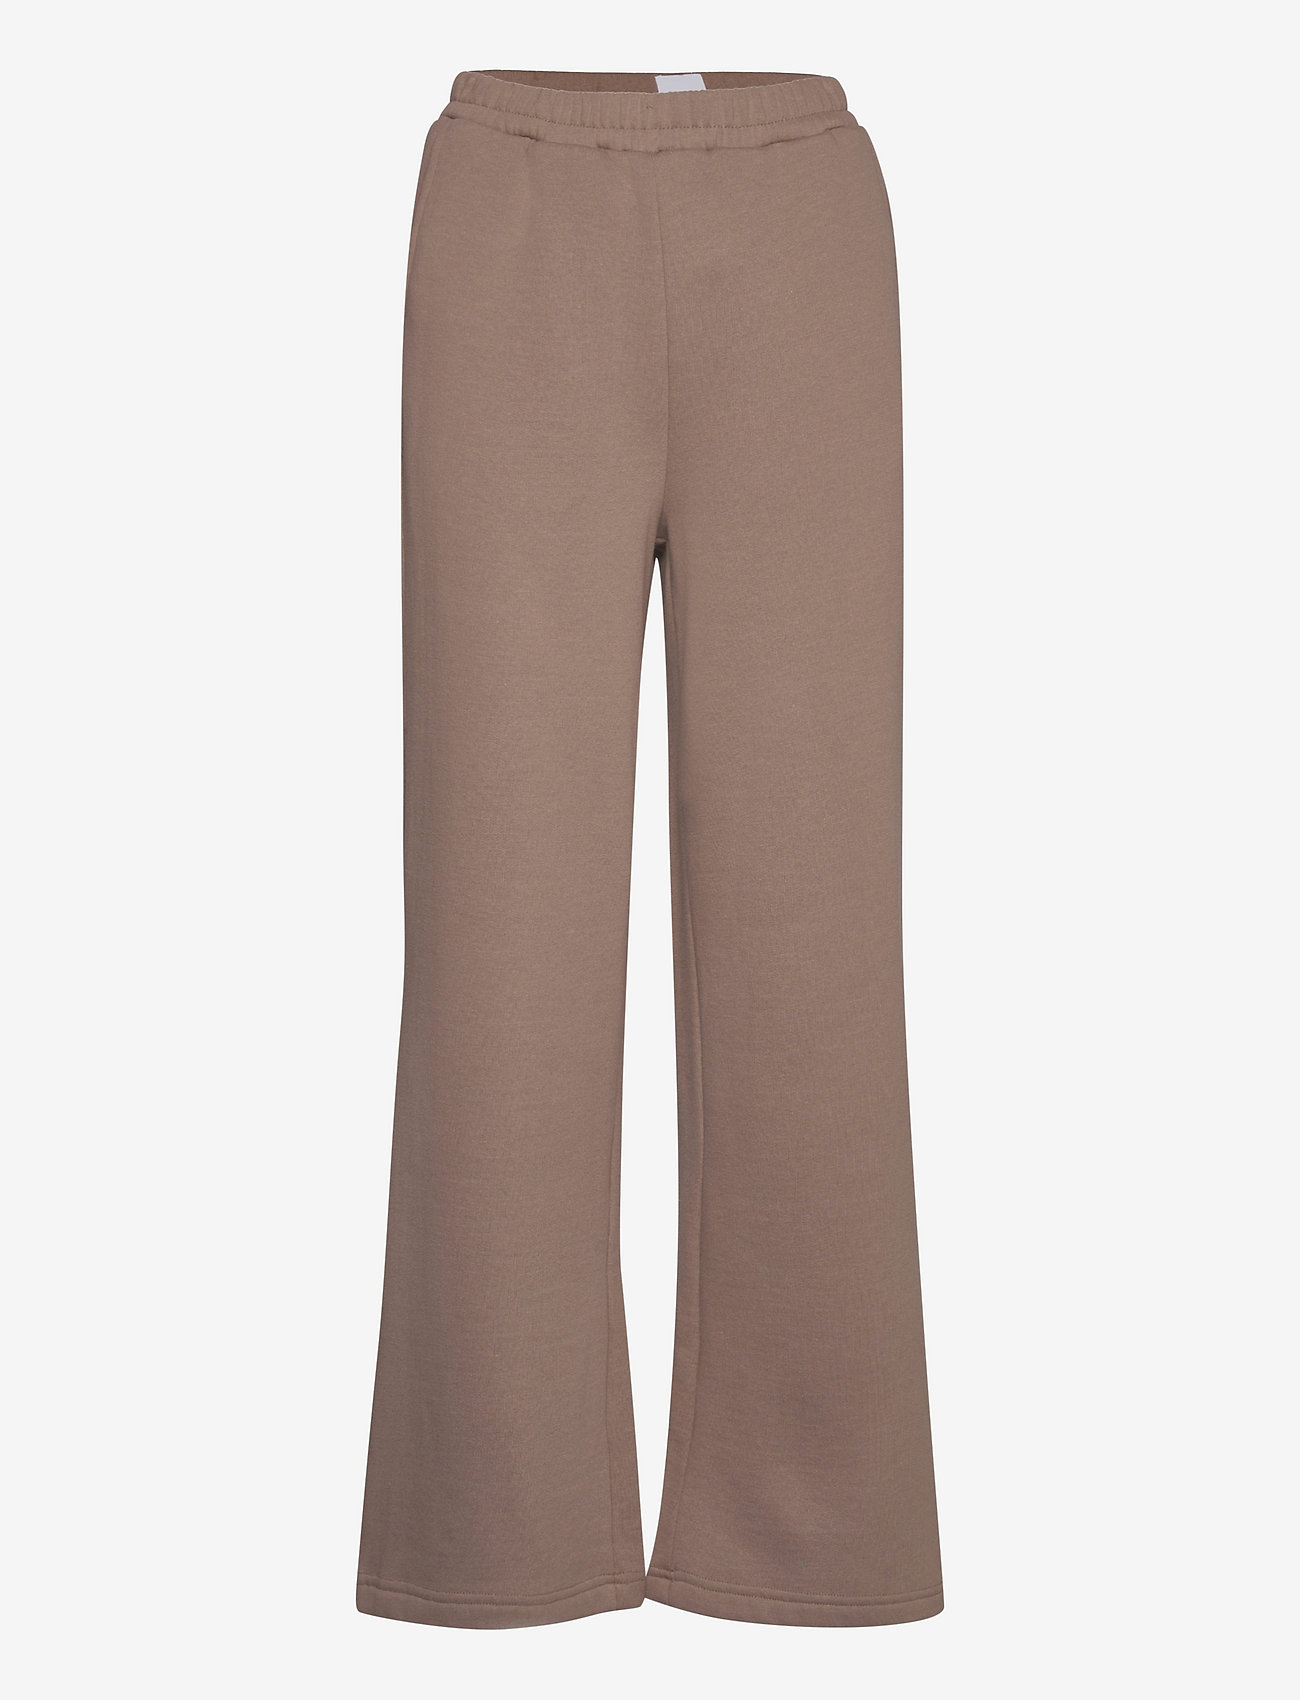 hálo - TUNDRA woolen wide college pants - joggersit - sand - 0